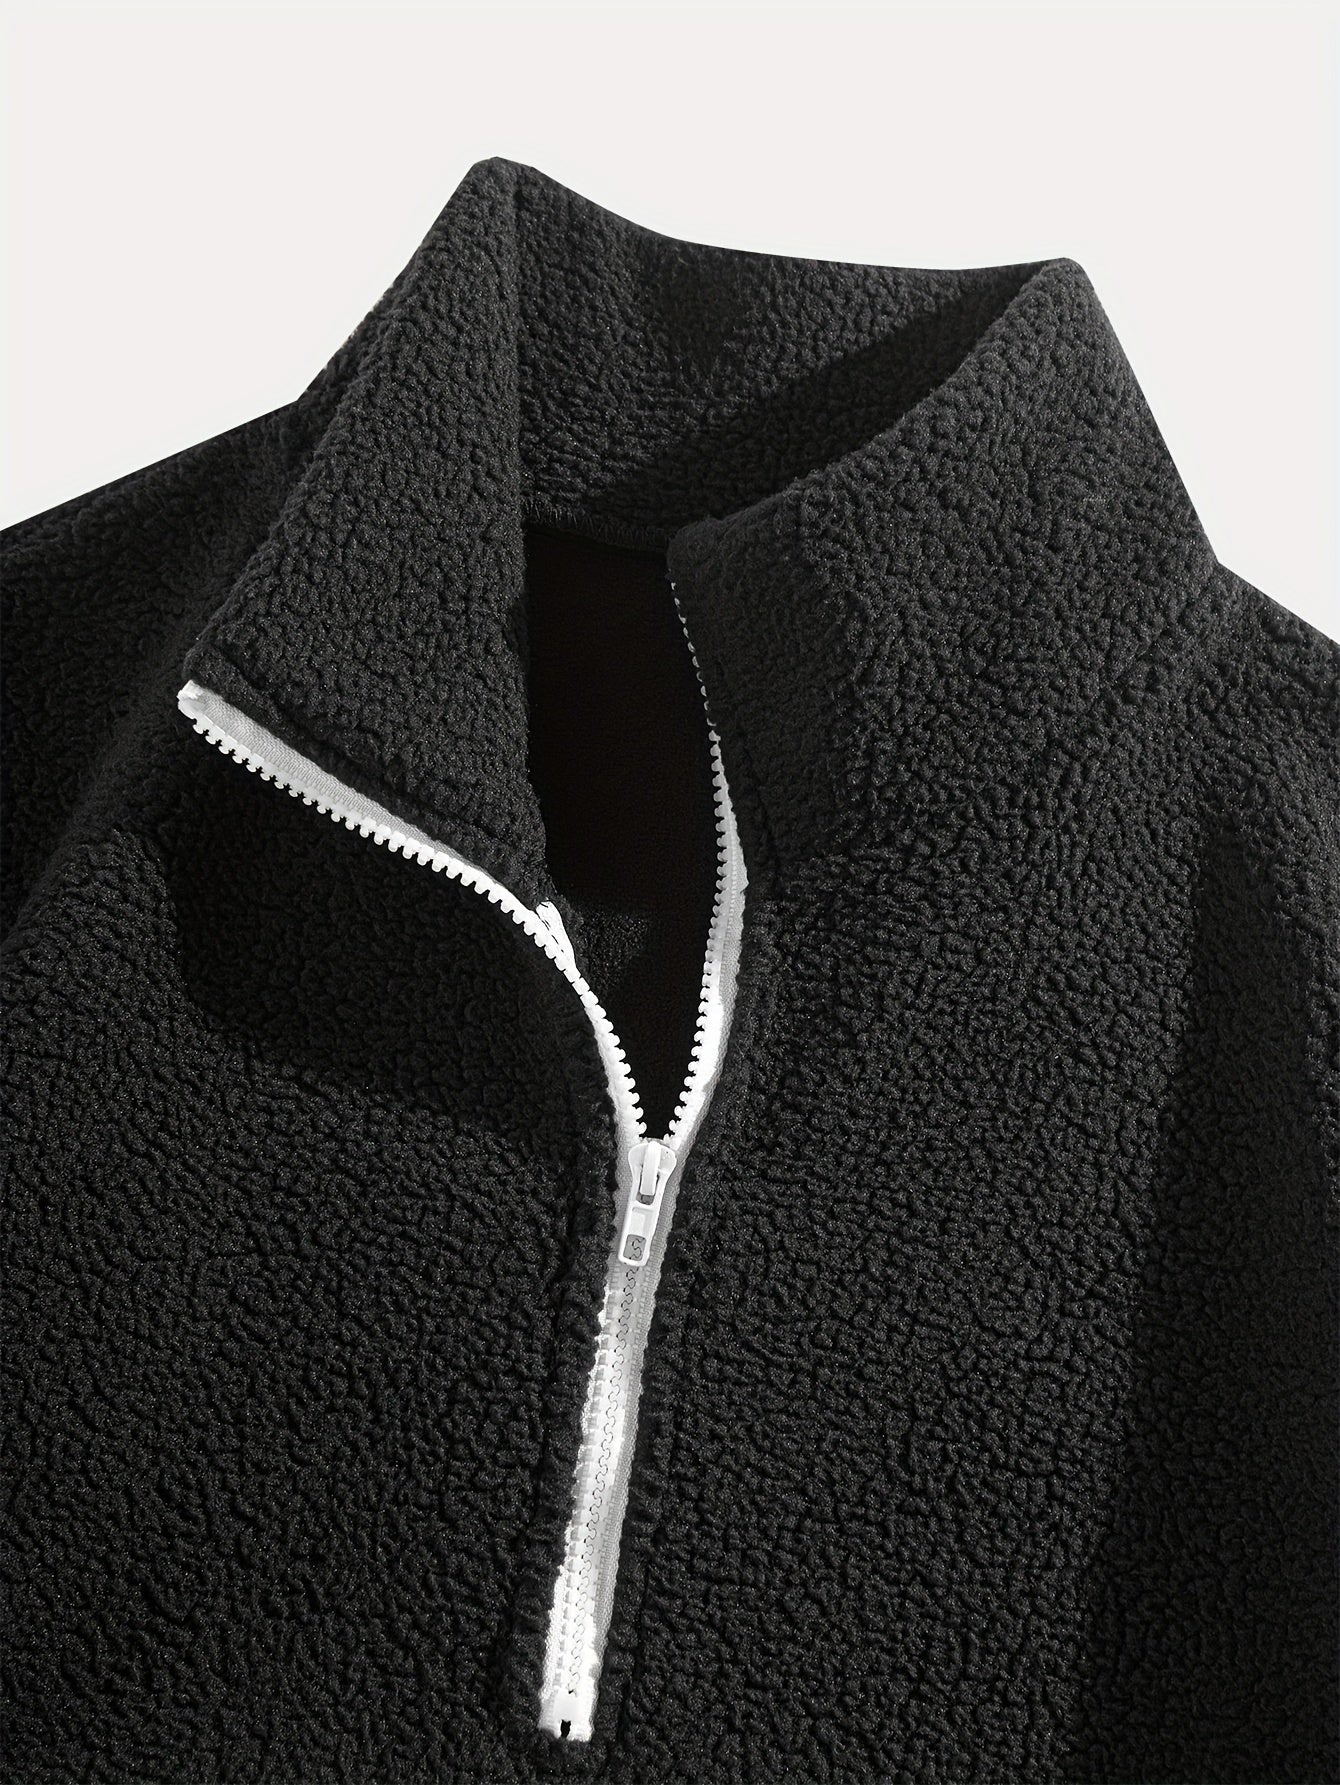 Men's Polar Fleece Jacket - Warm, Stylish and Breathable